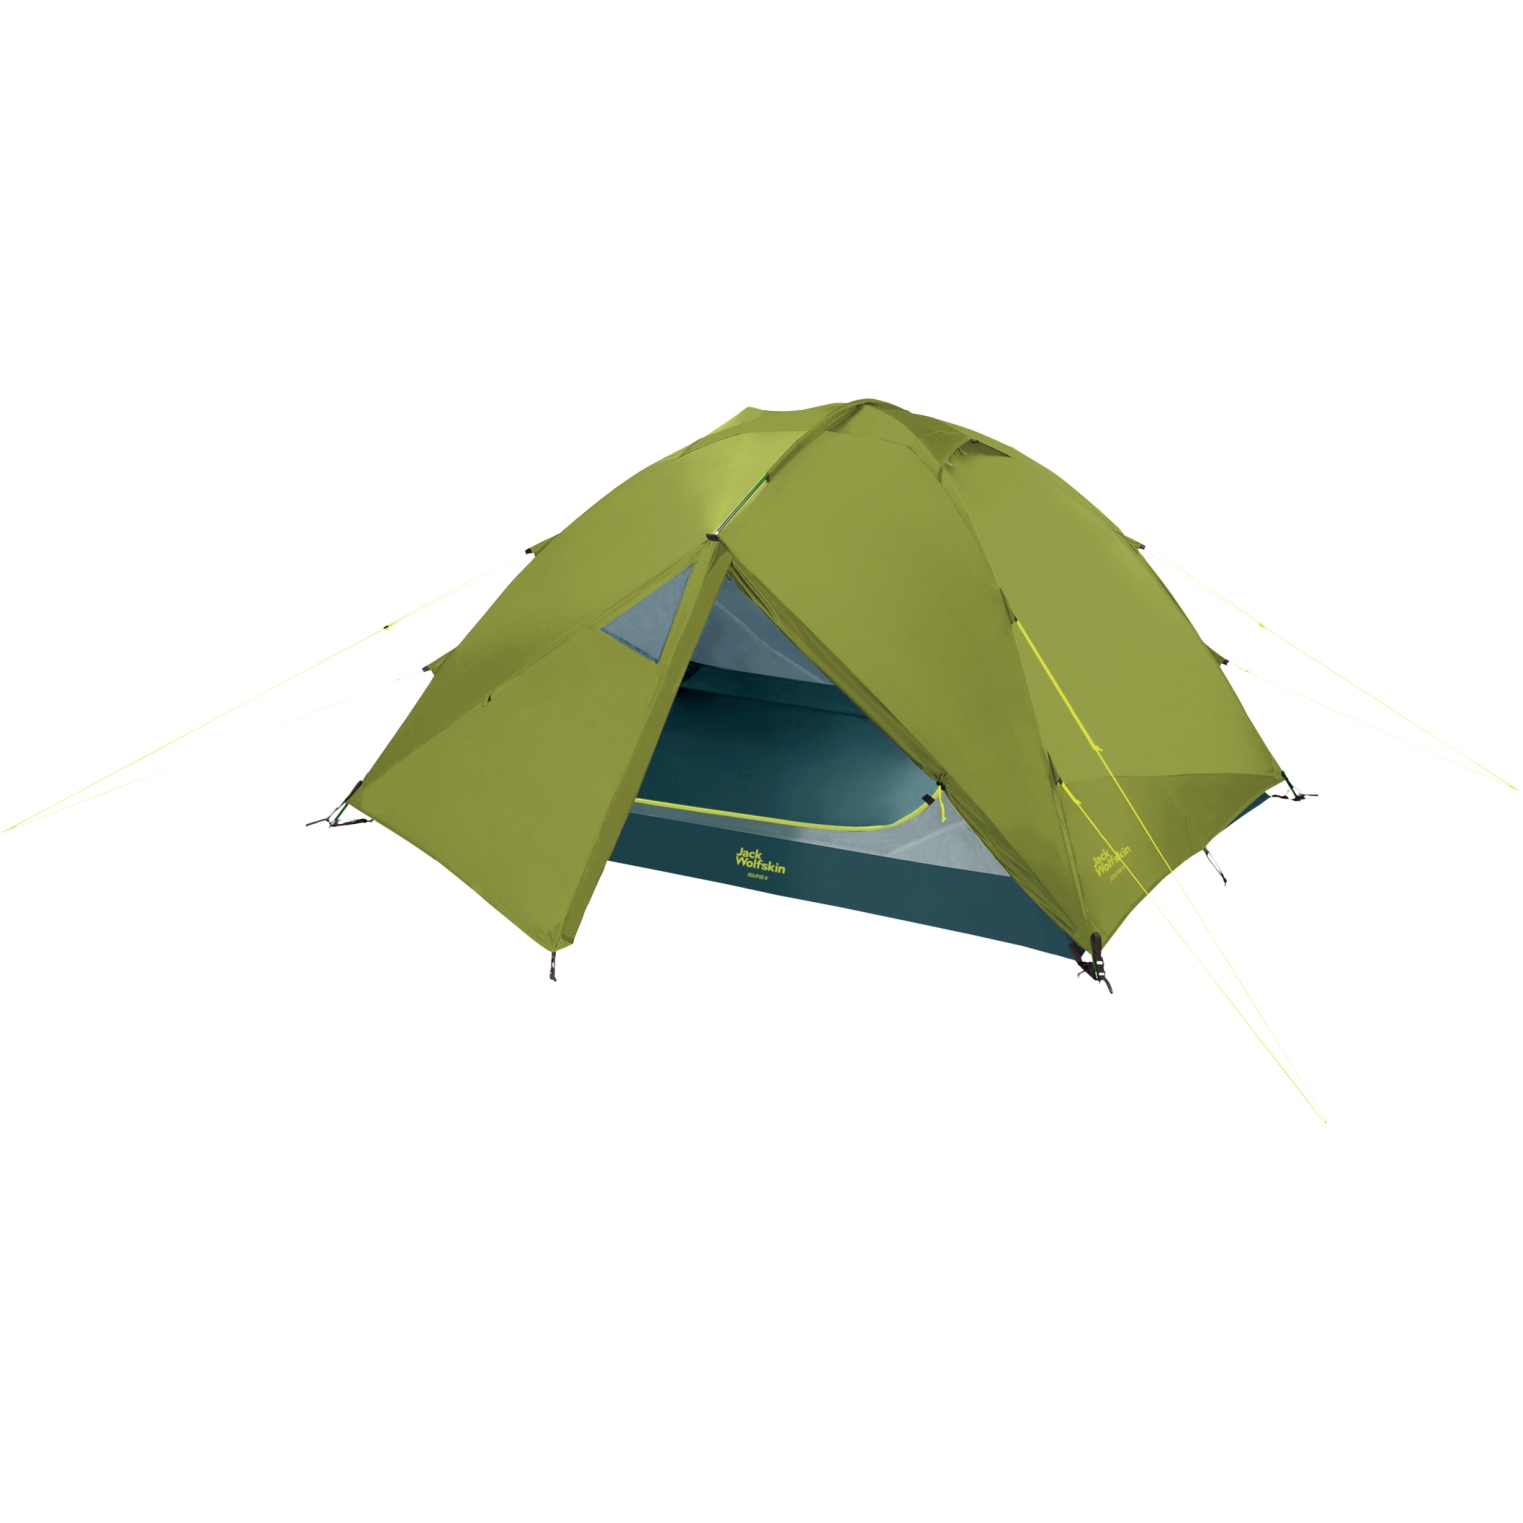 Productfoto van Jack Wolfskin Eclipse II Tent - ginkgo green